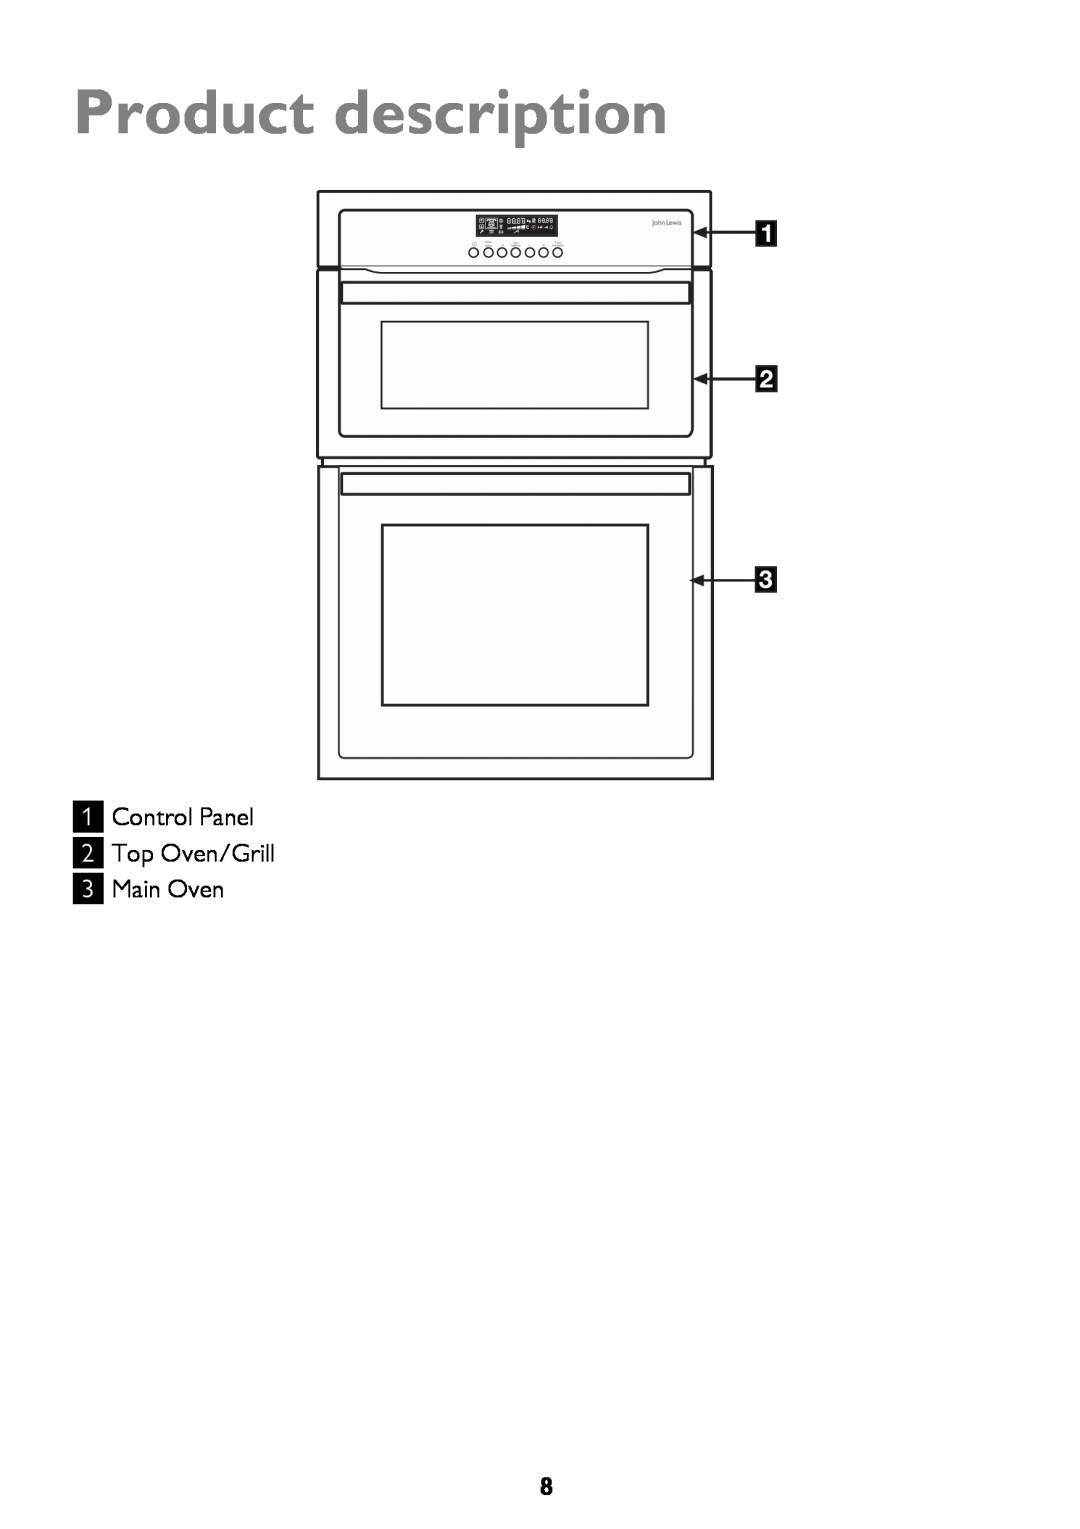 John Lewis JLBIDO911 instruction manual Product description, Control Panel 2 Top Oven/Grill 3 Main Oven 